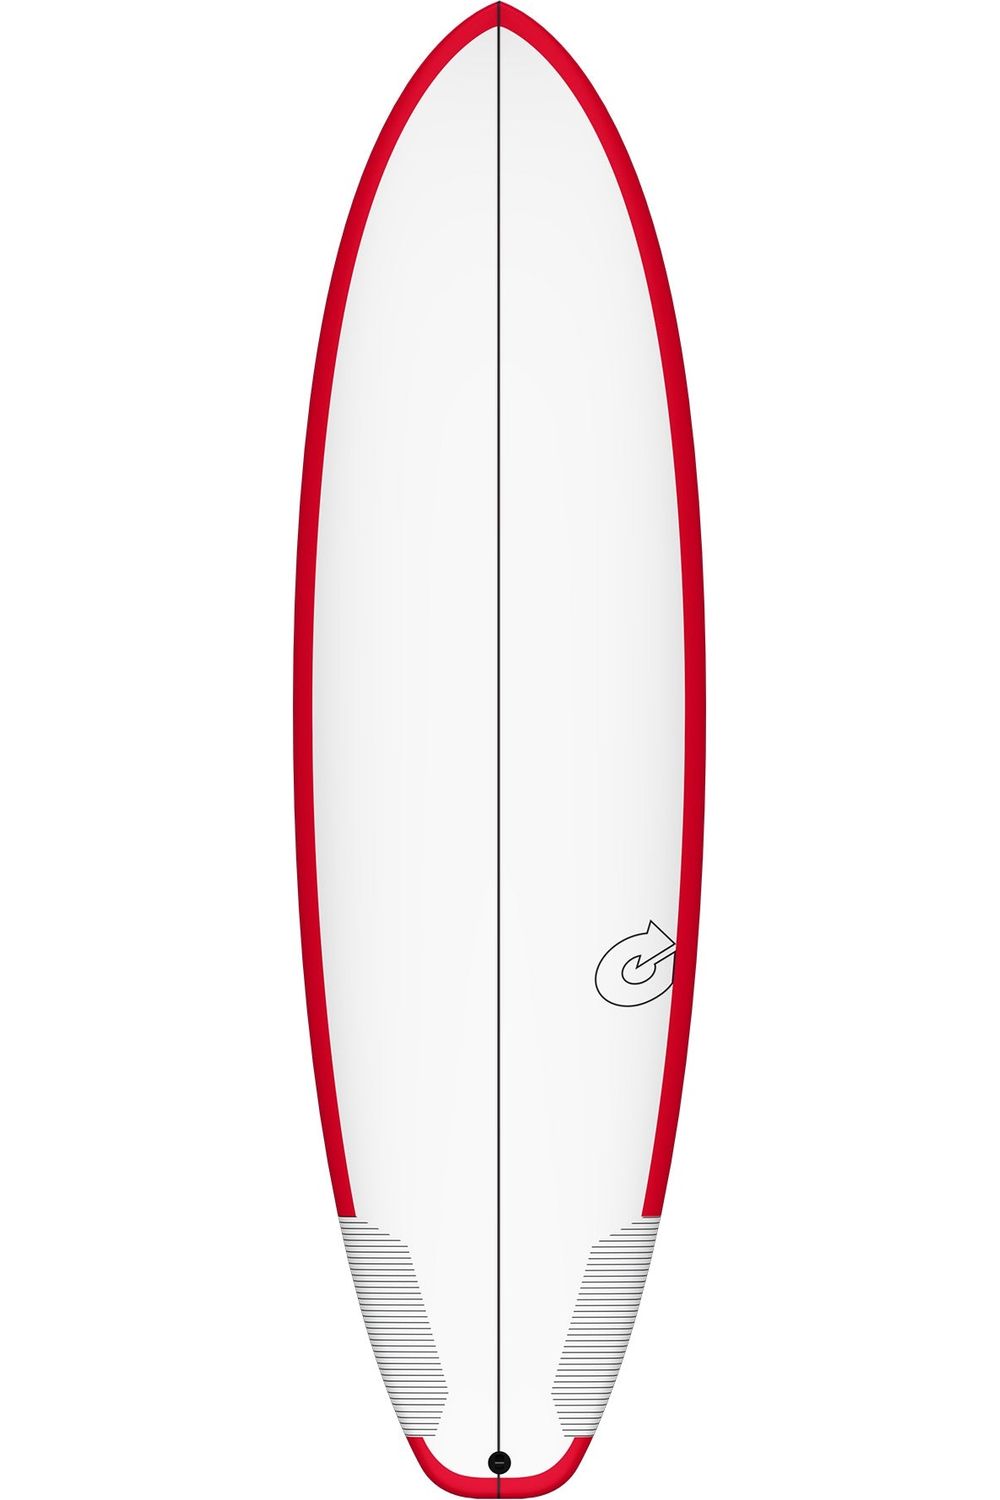 Torq TEC BigBoy23 Surfboard in Red/White